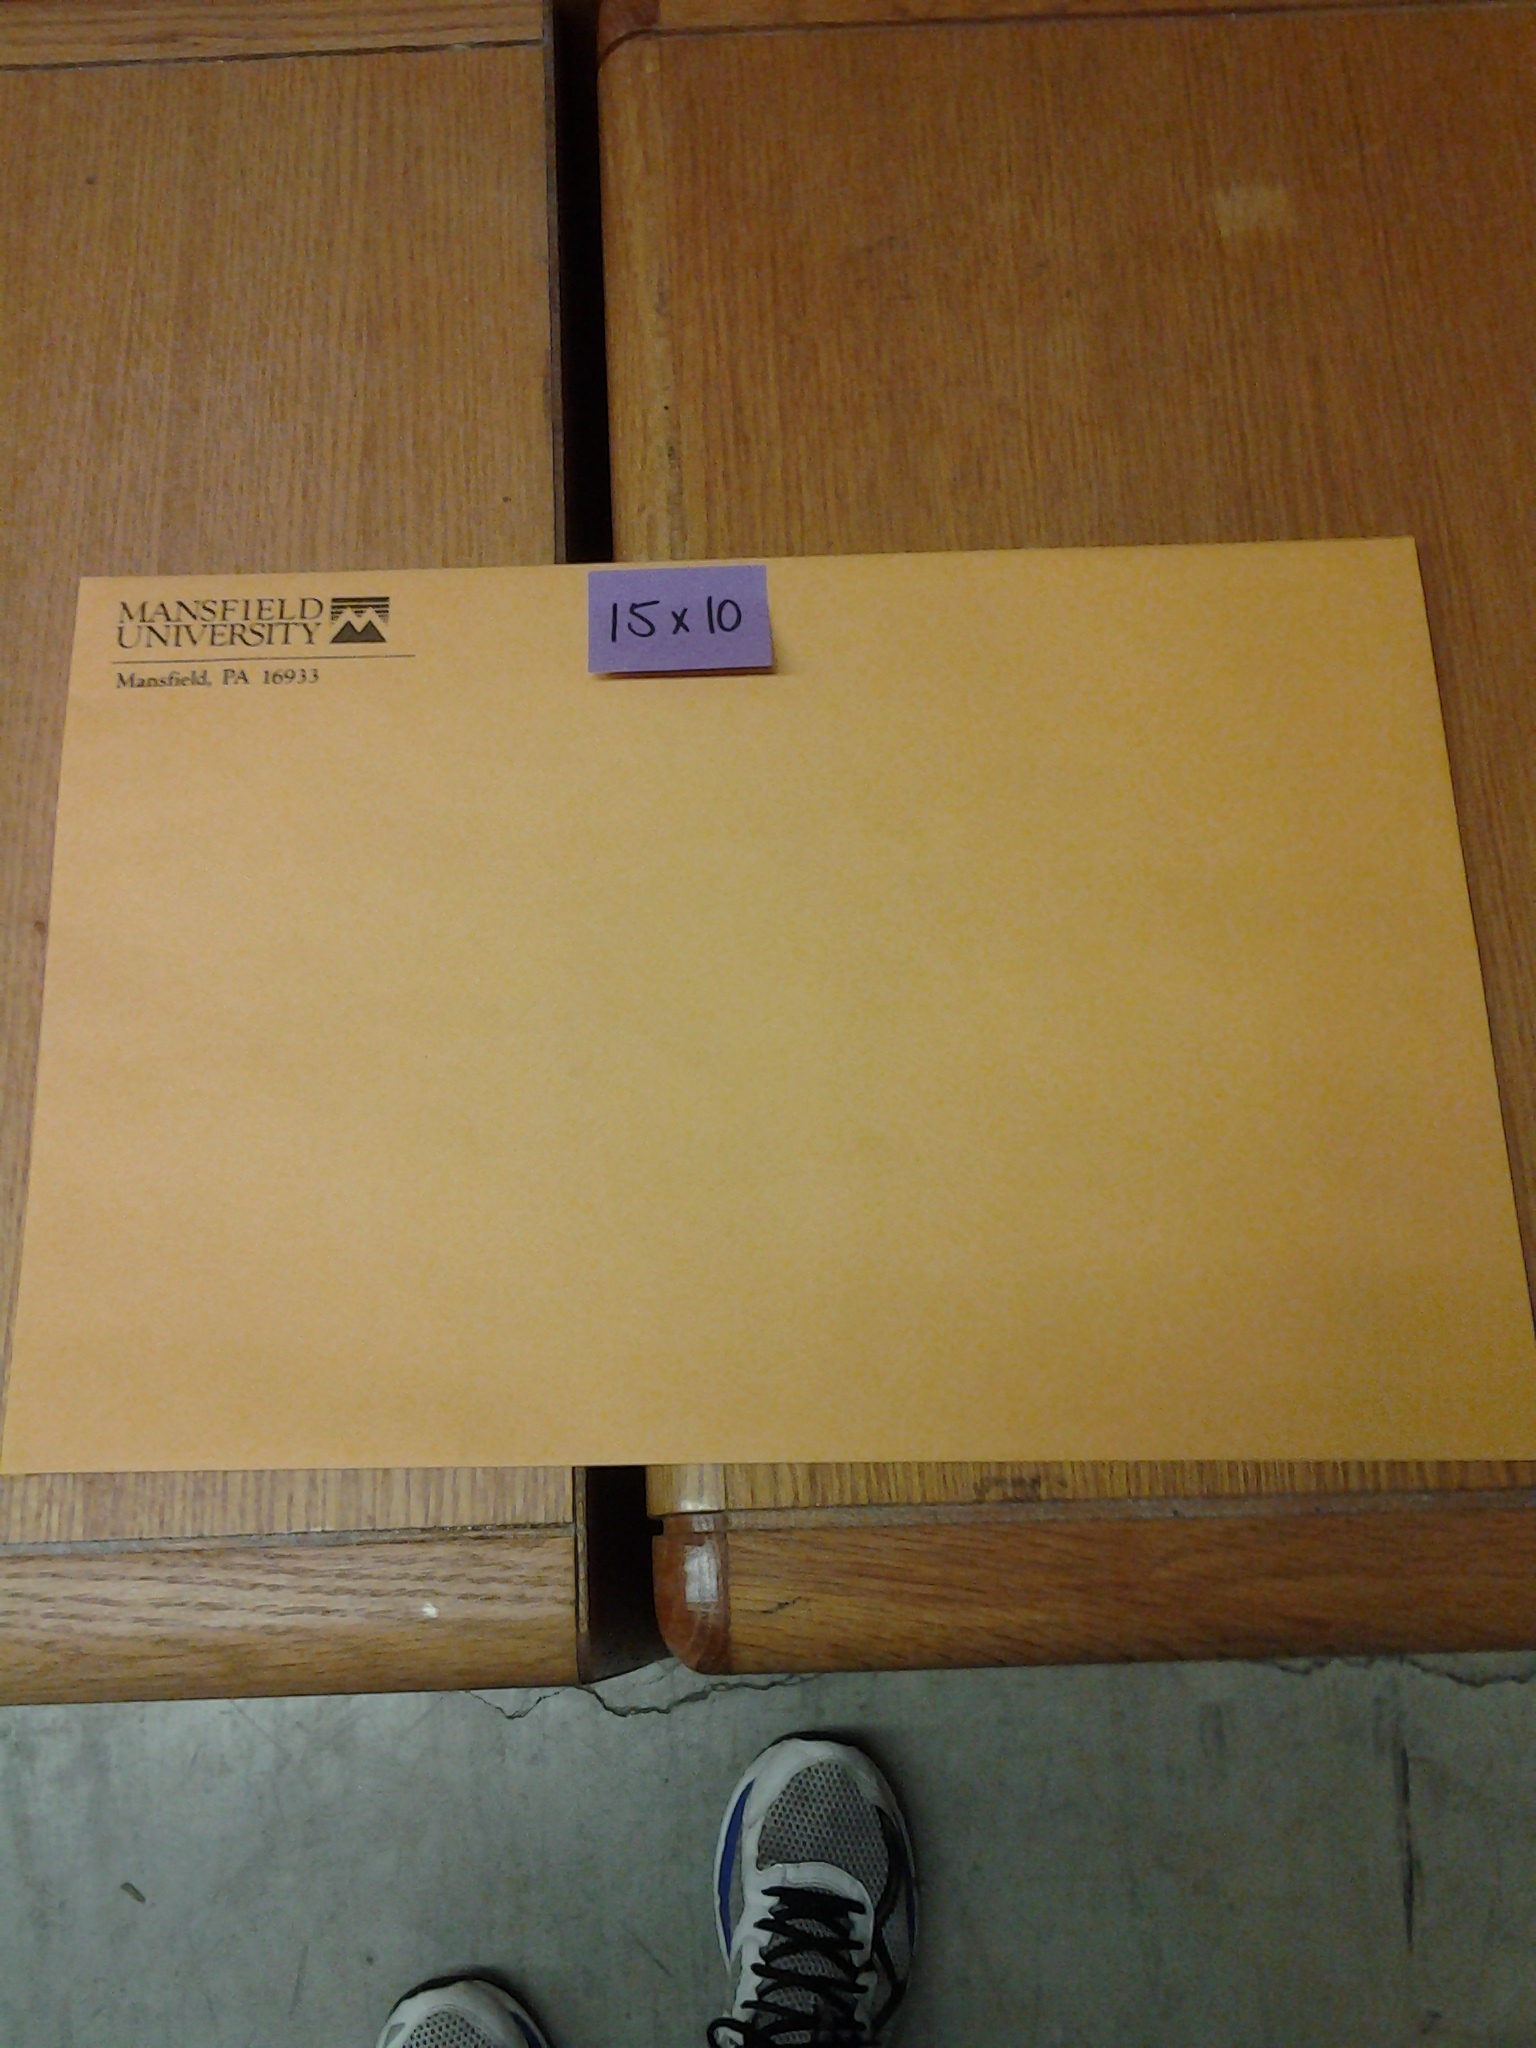 15 x 10 Envelopes